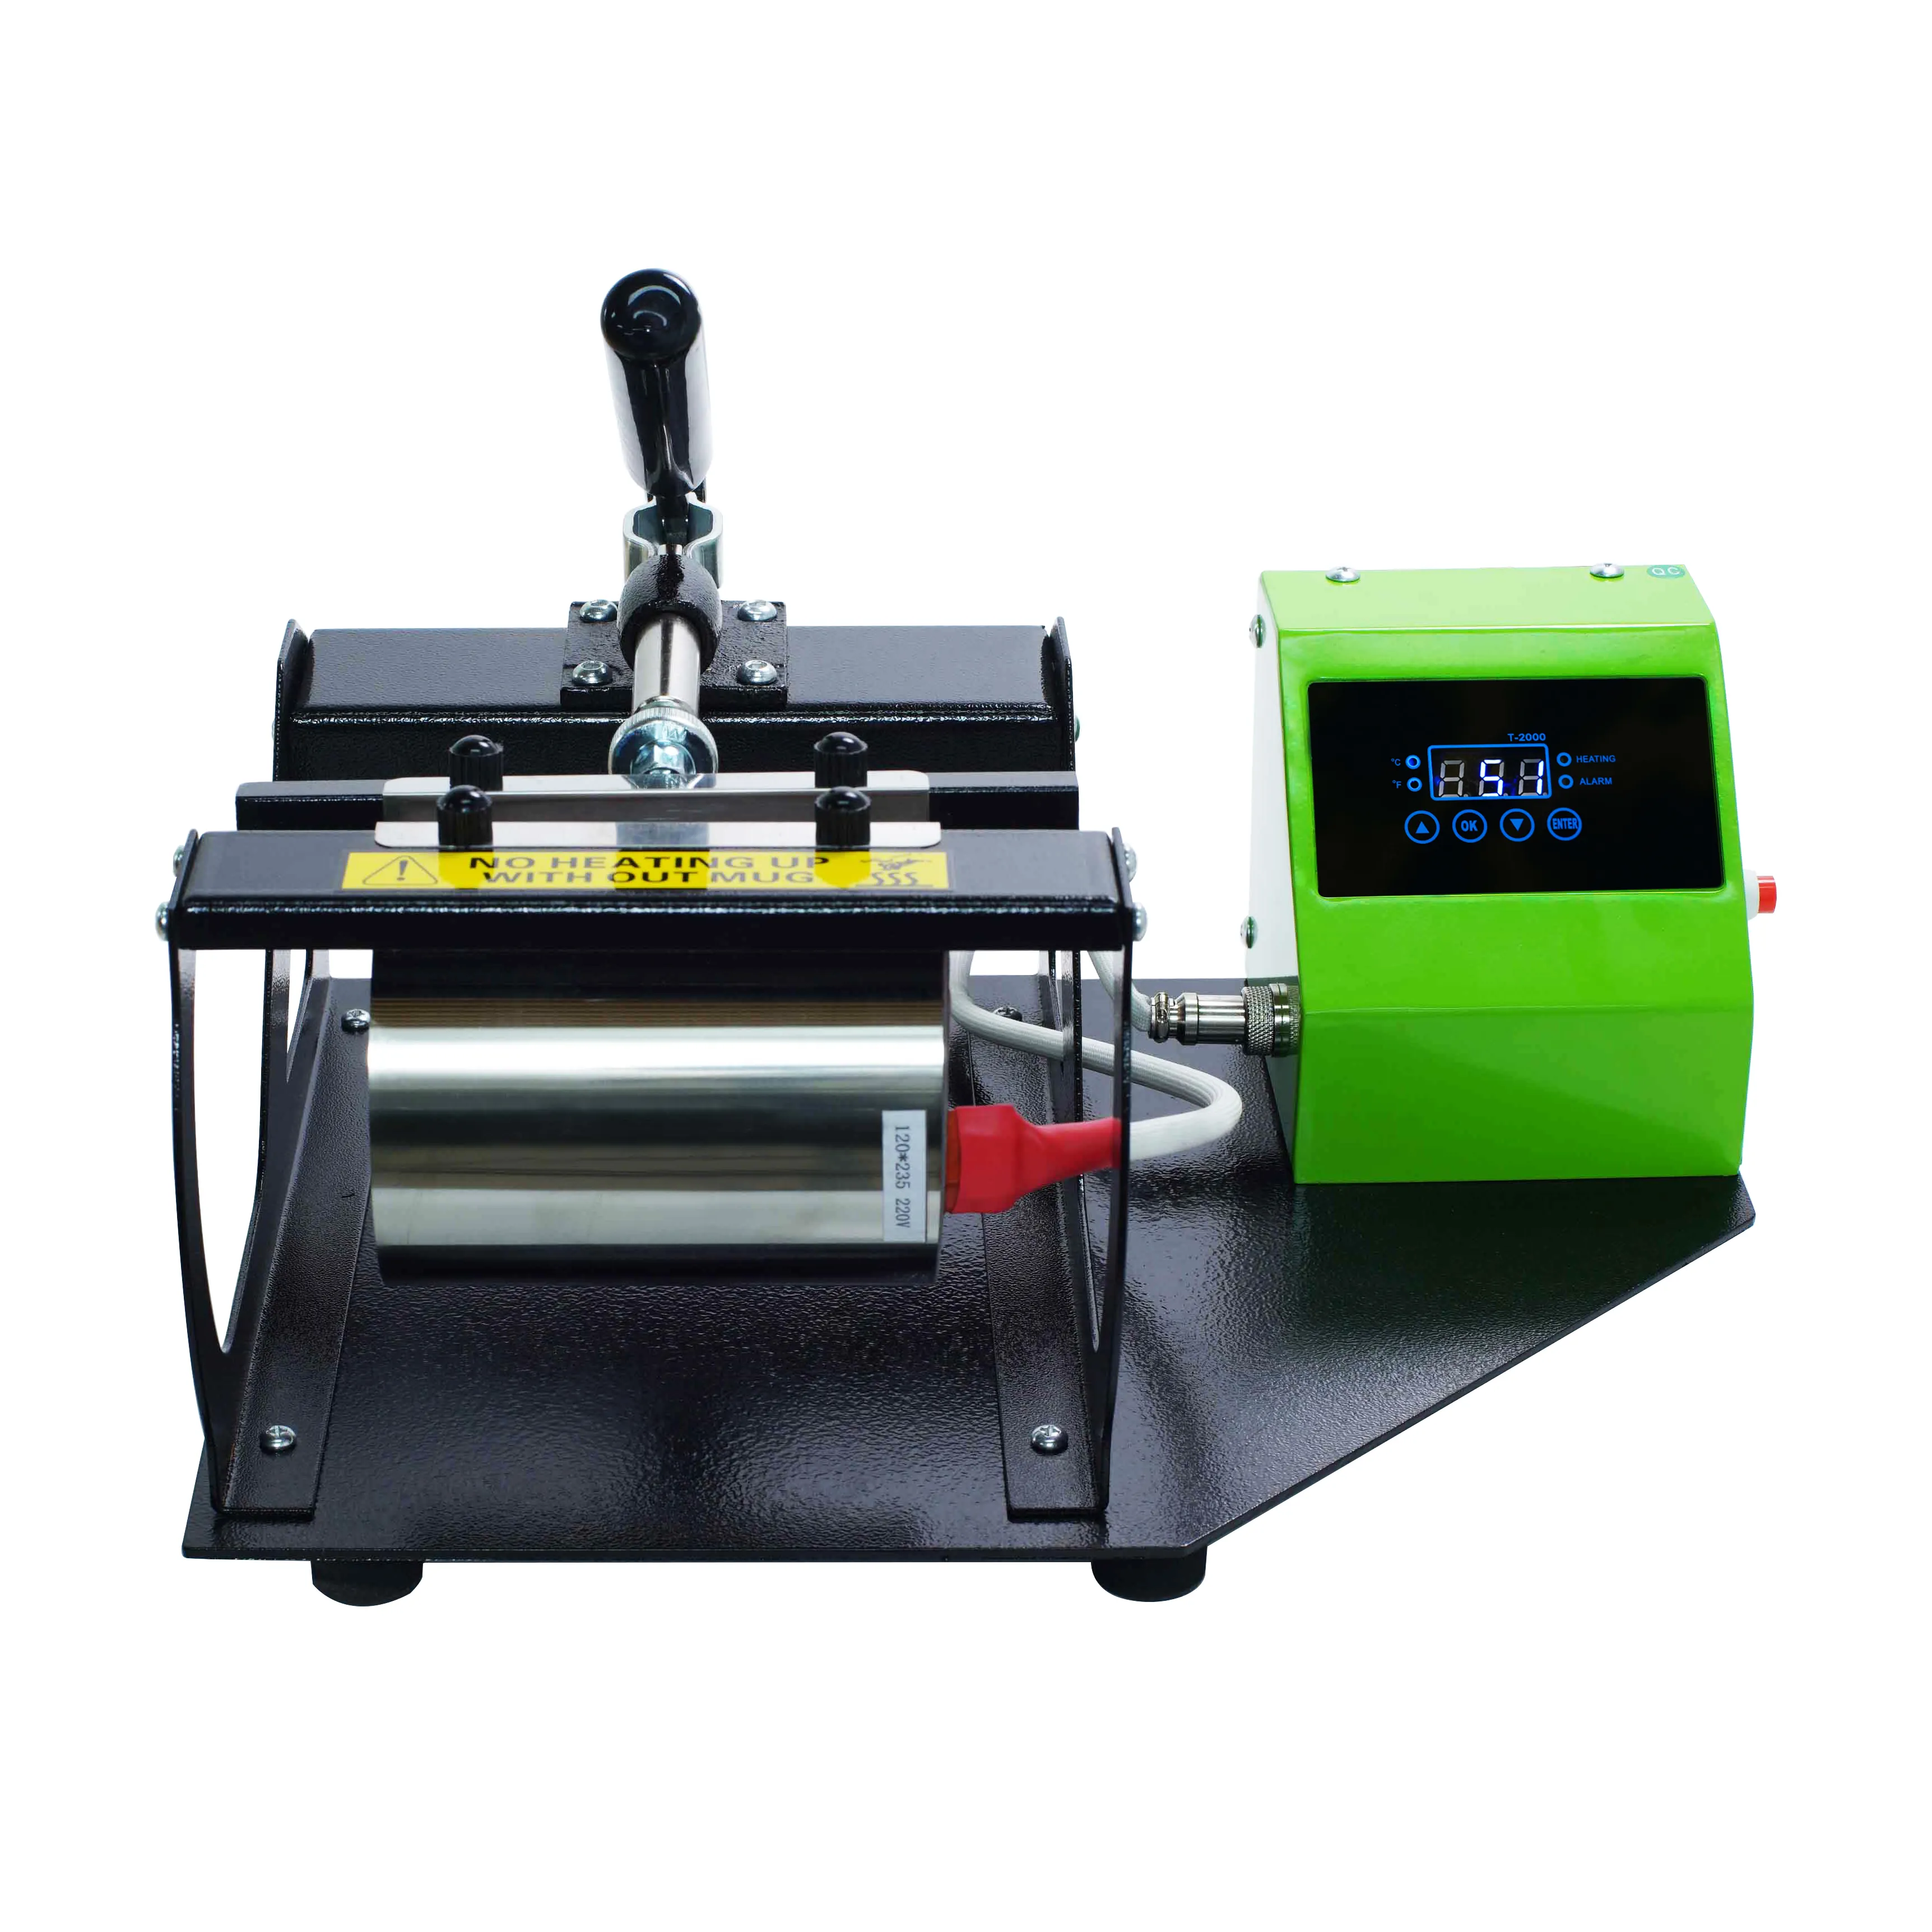 11oz 10oz Mini Type Low Price Mug Heat Press Machine Lvd Mug Printing Machine Price in India Manual 5 Years 10KG/22LBS 115x235mm